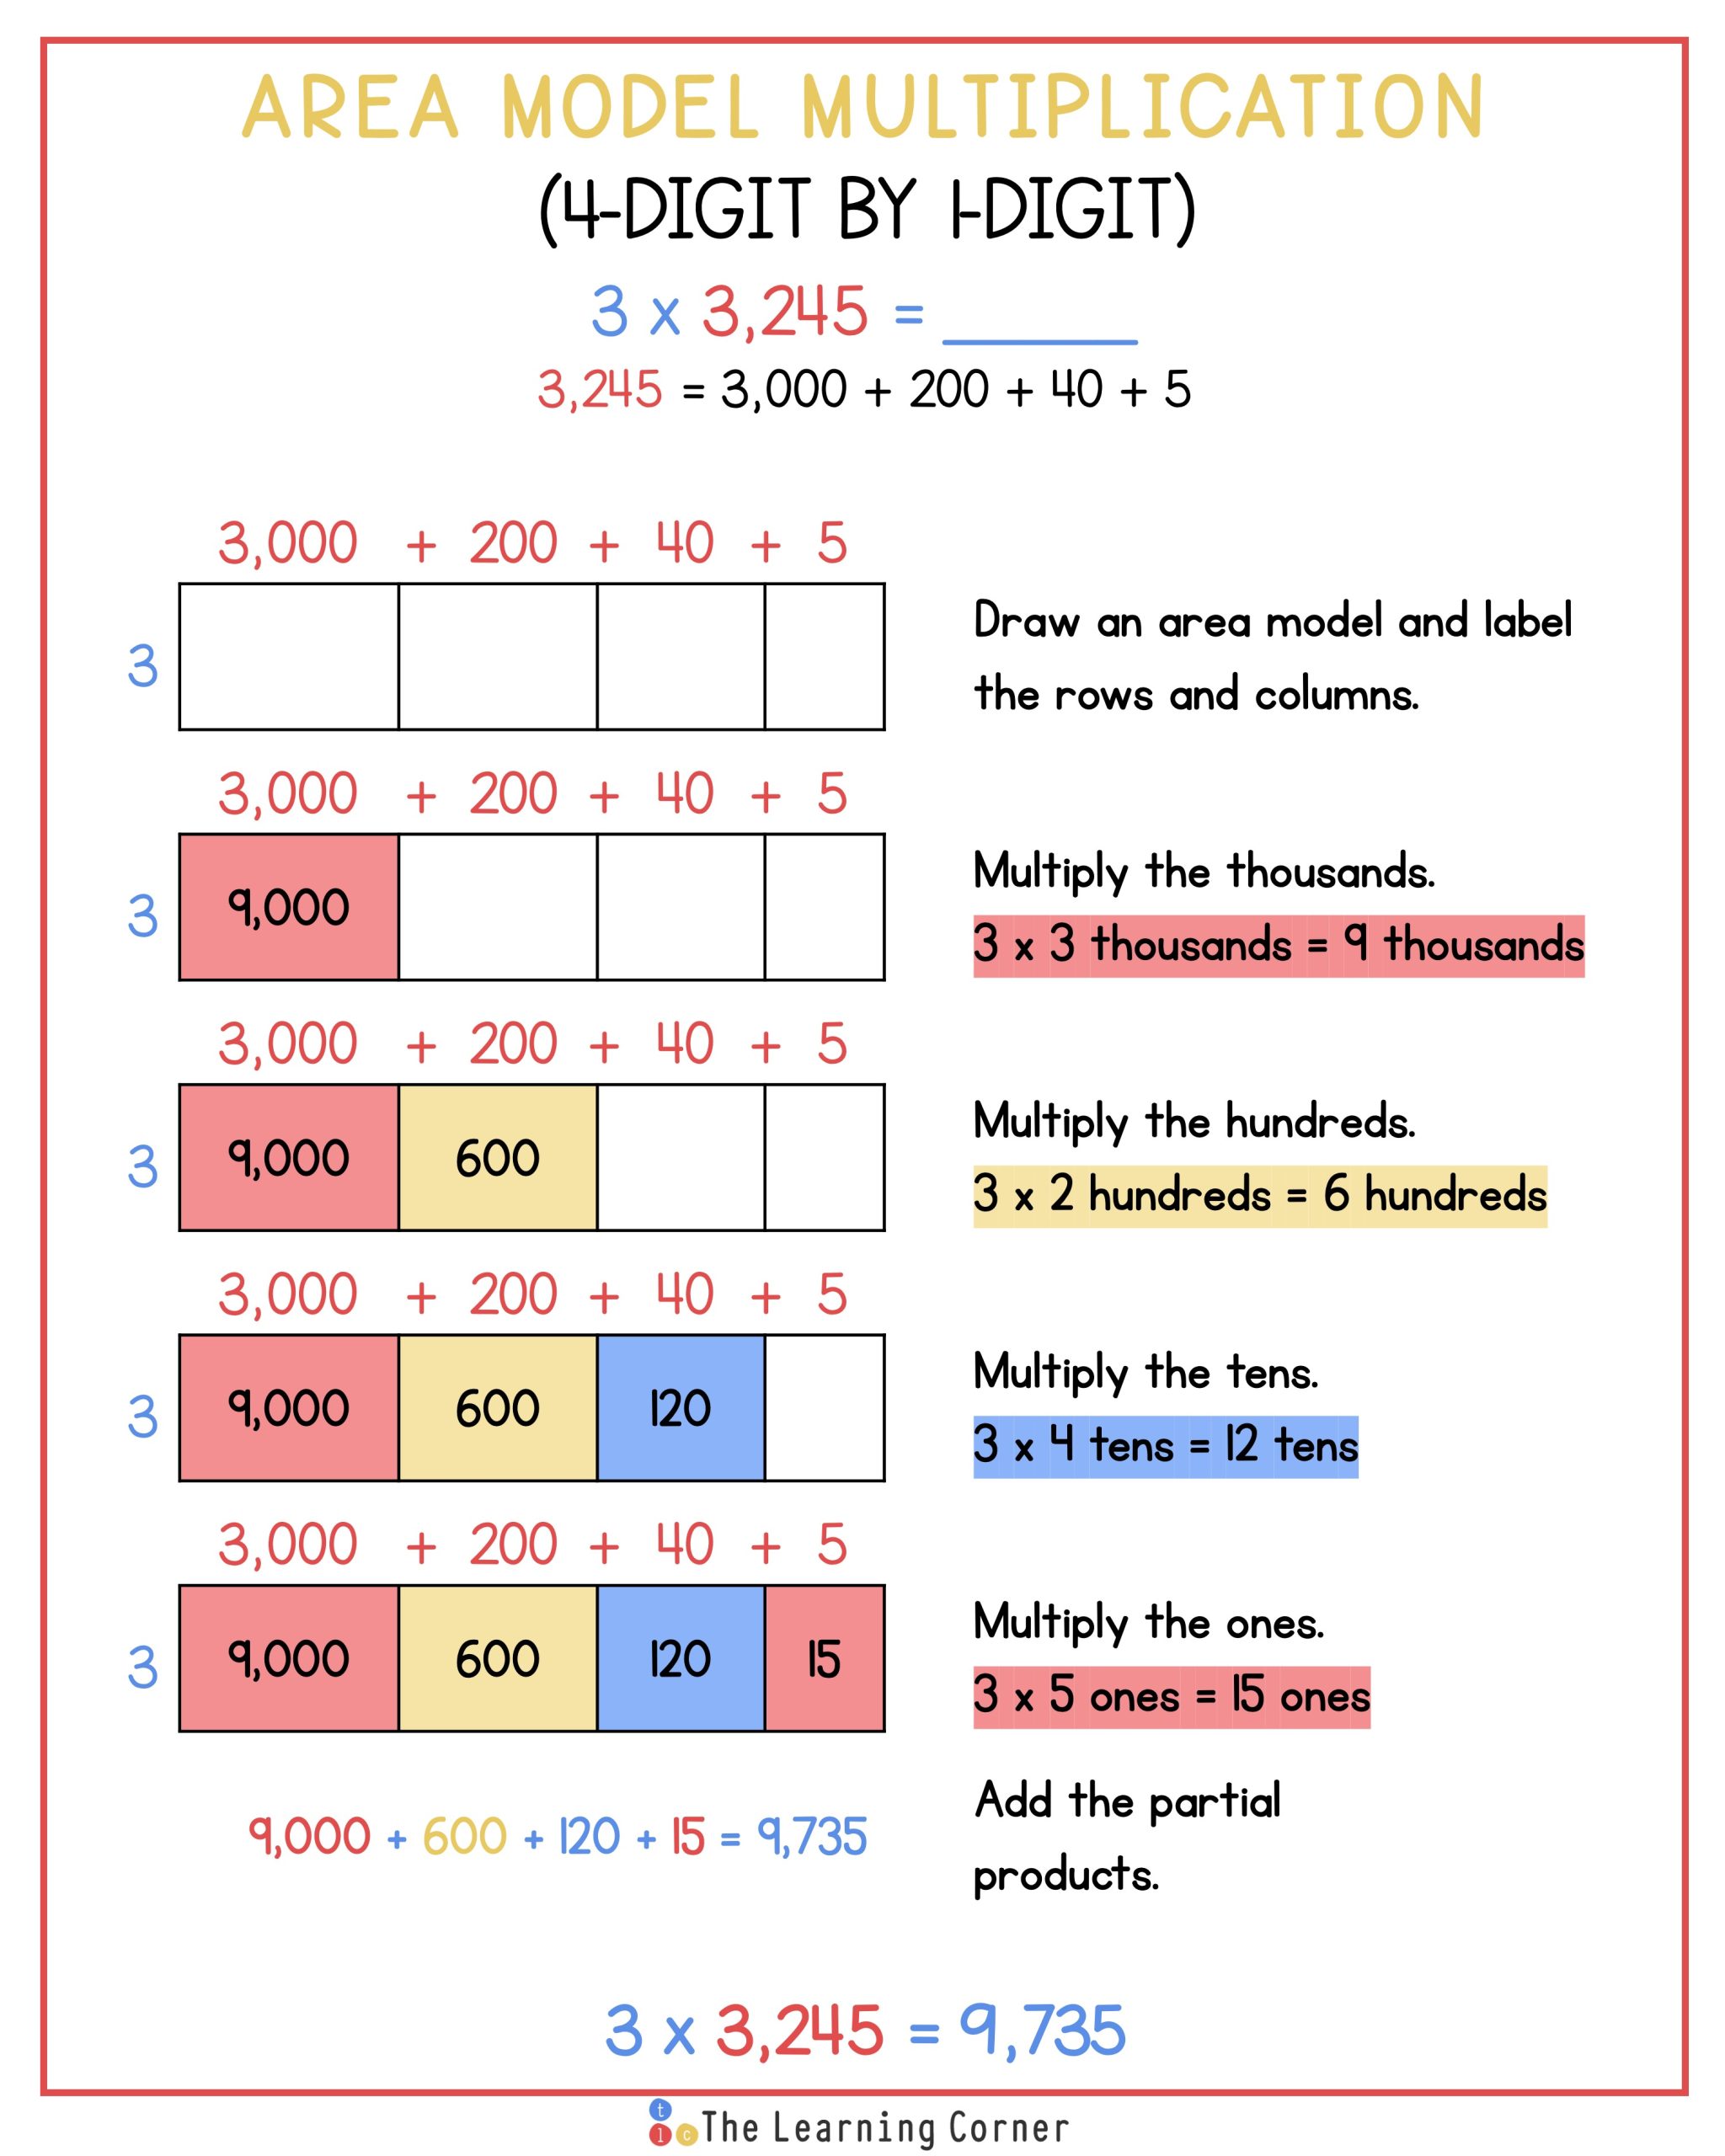 4 digit by 1 digit multiplication using area model